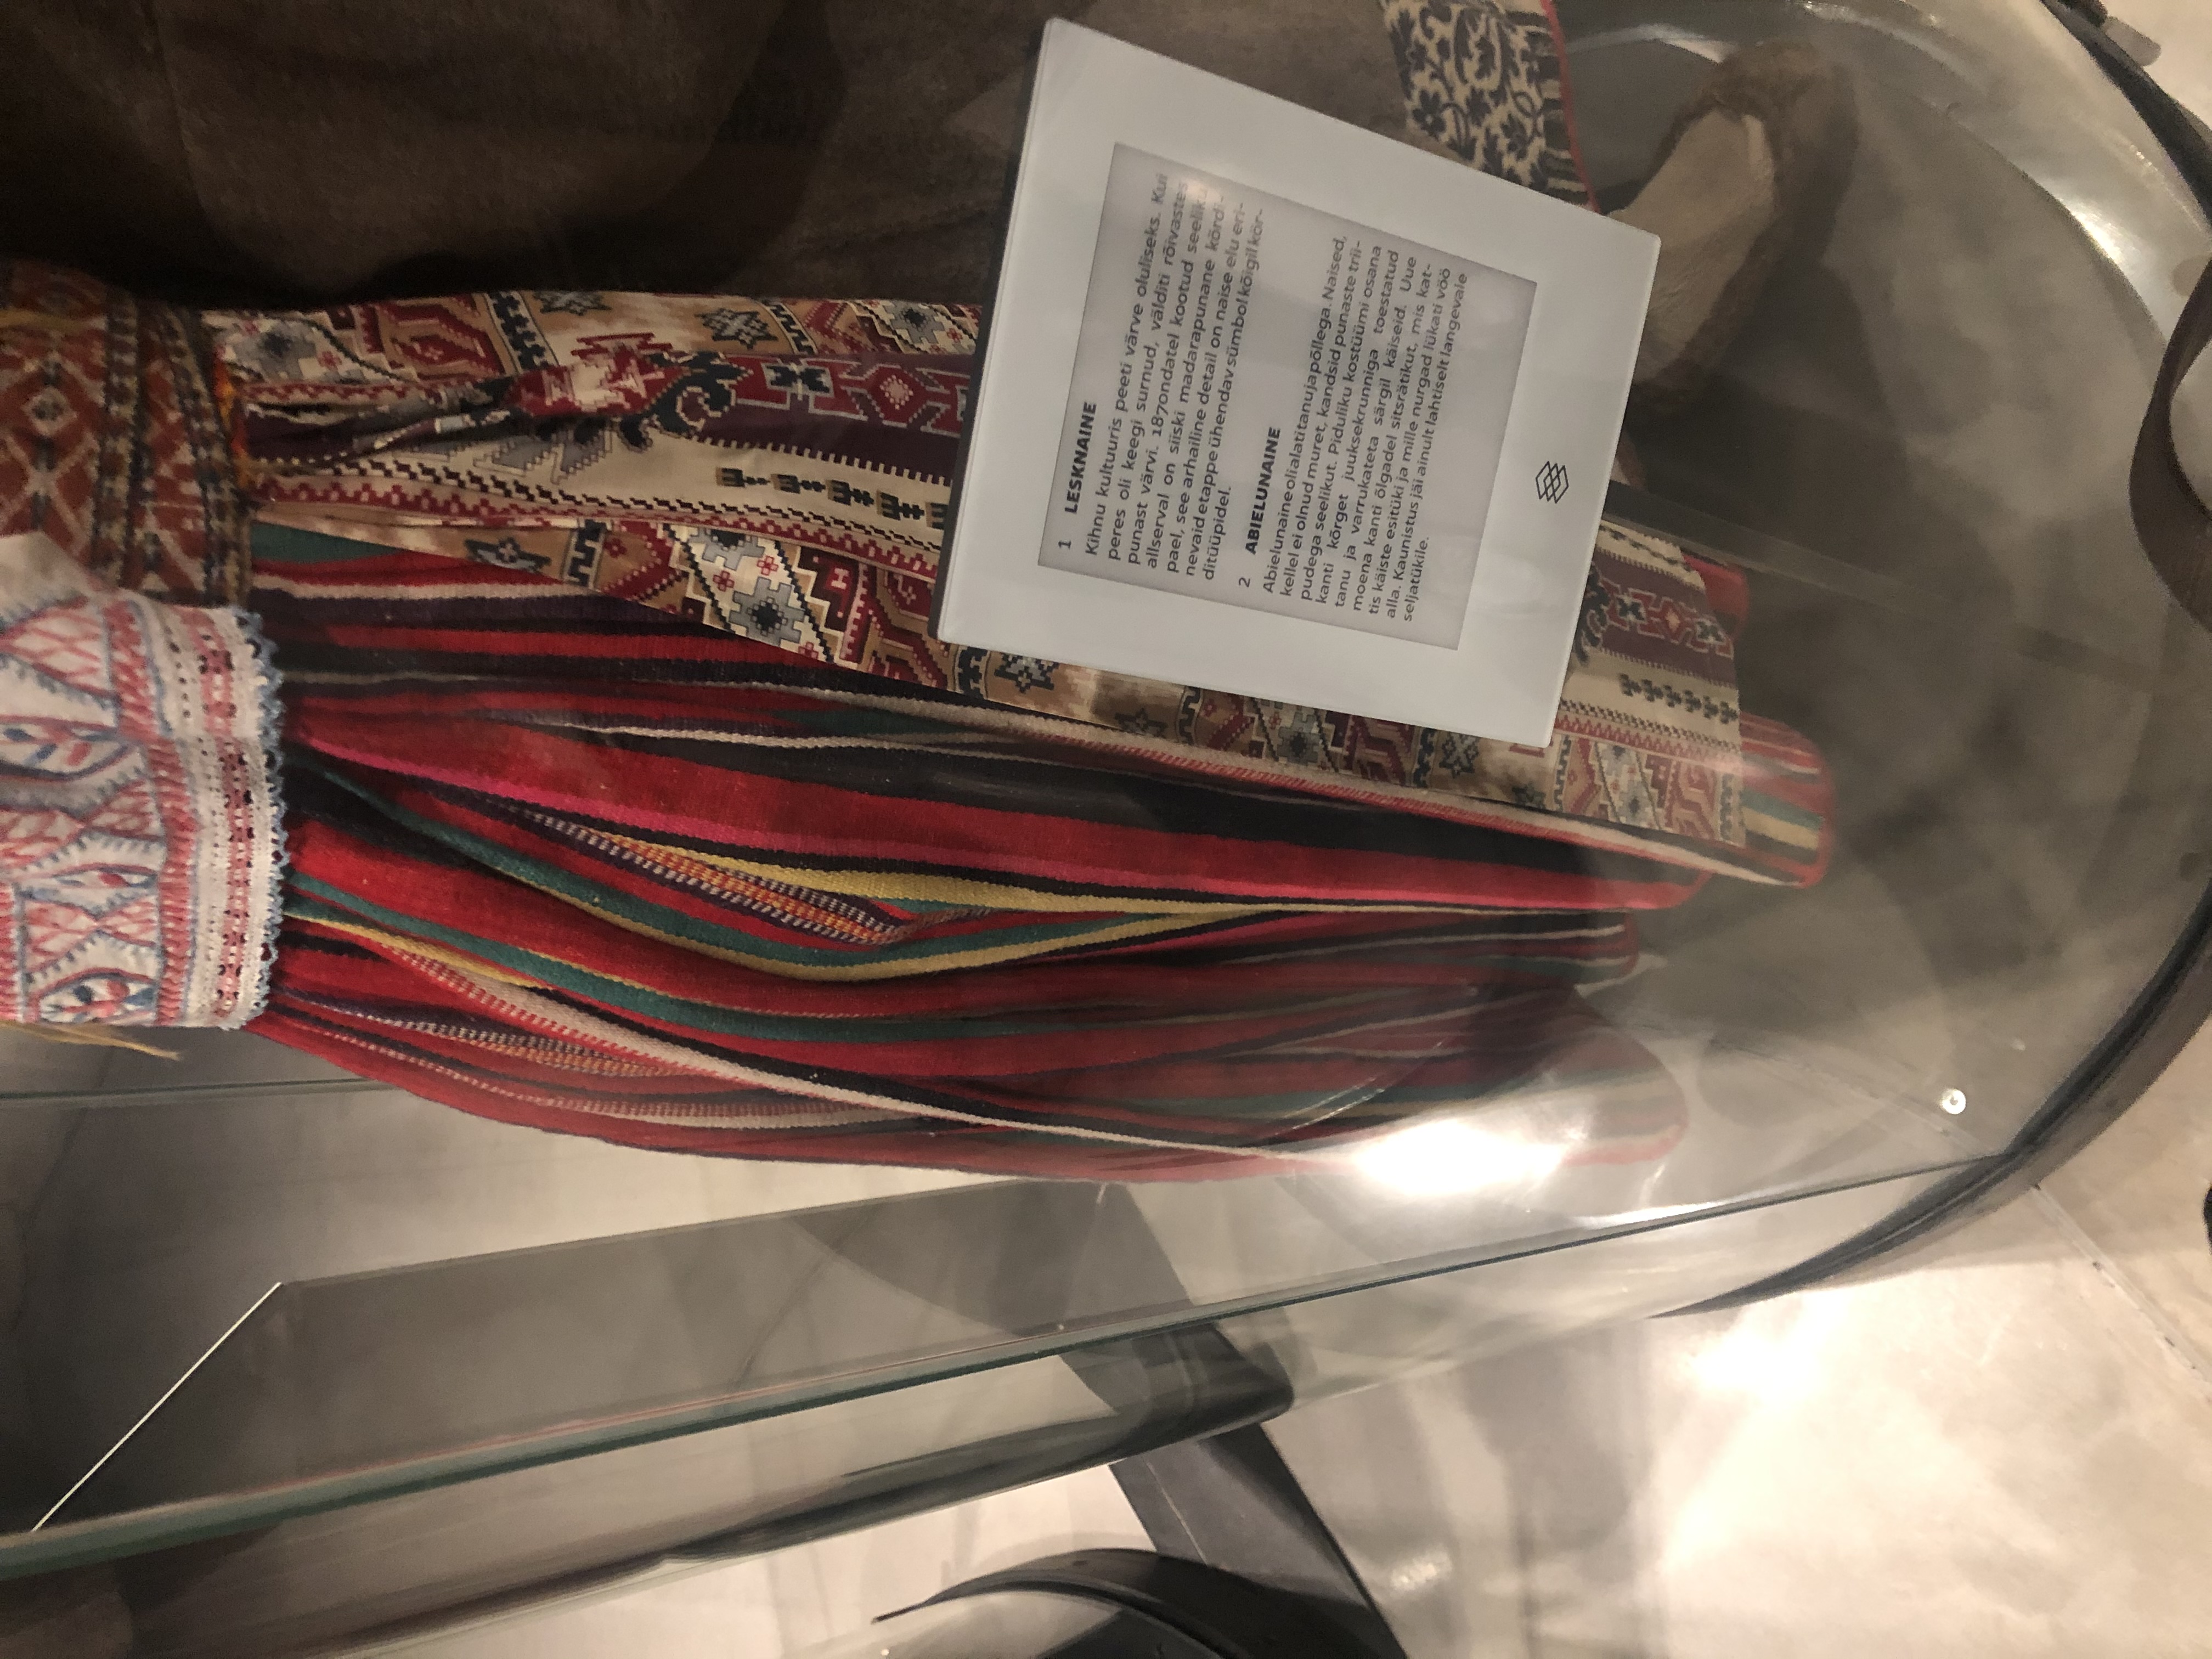 Tartu striped apron